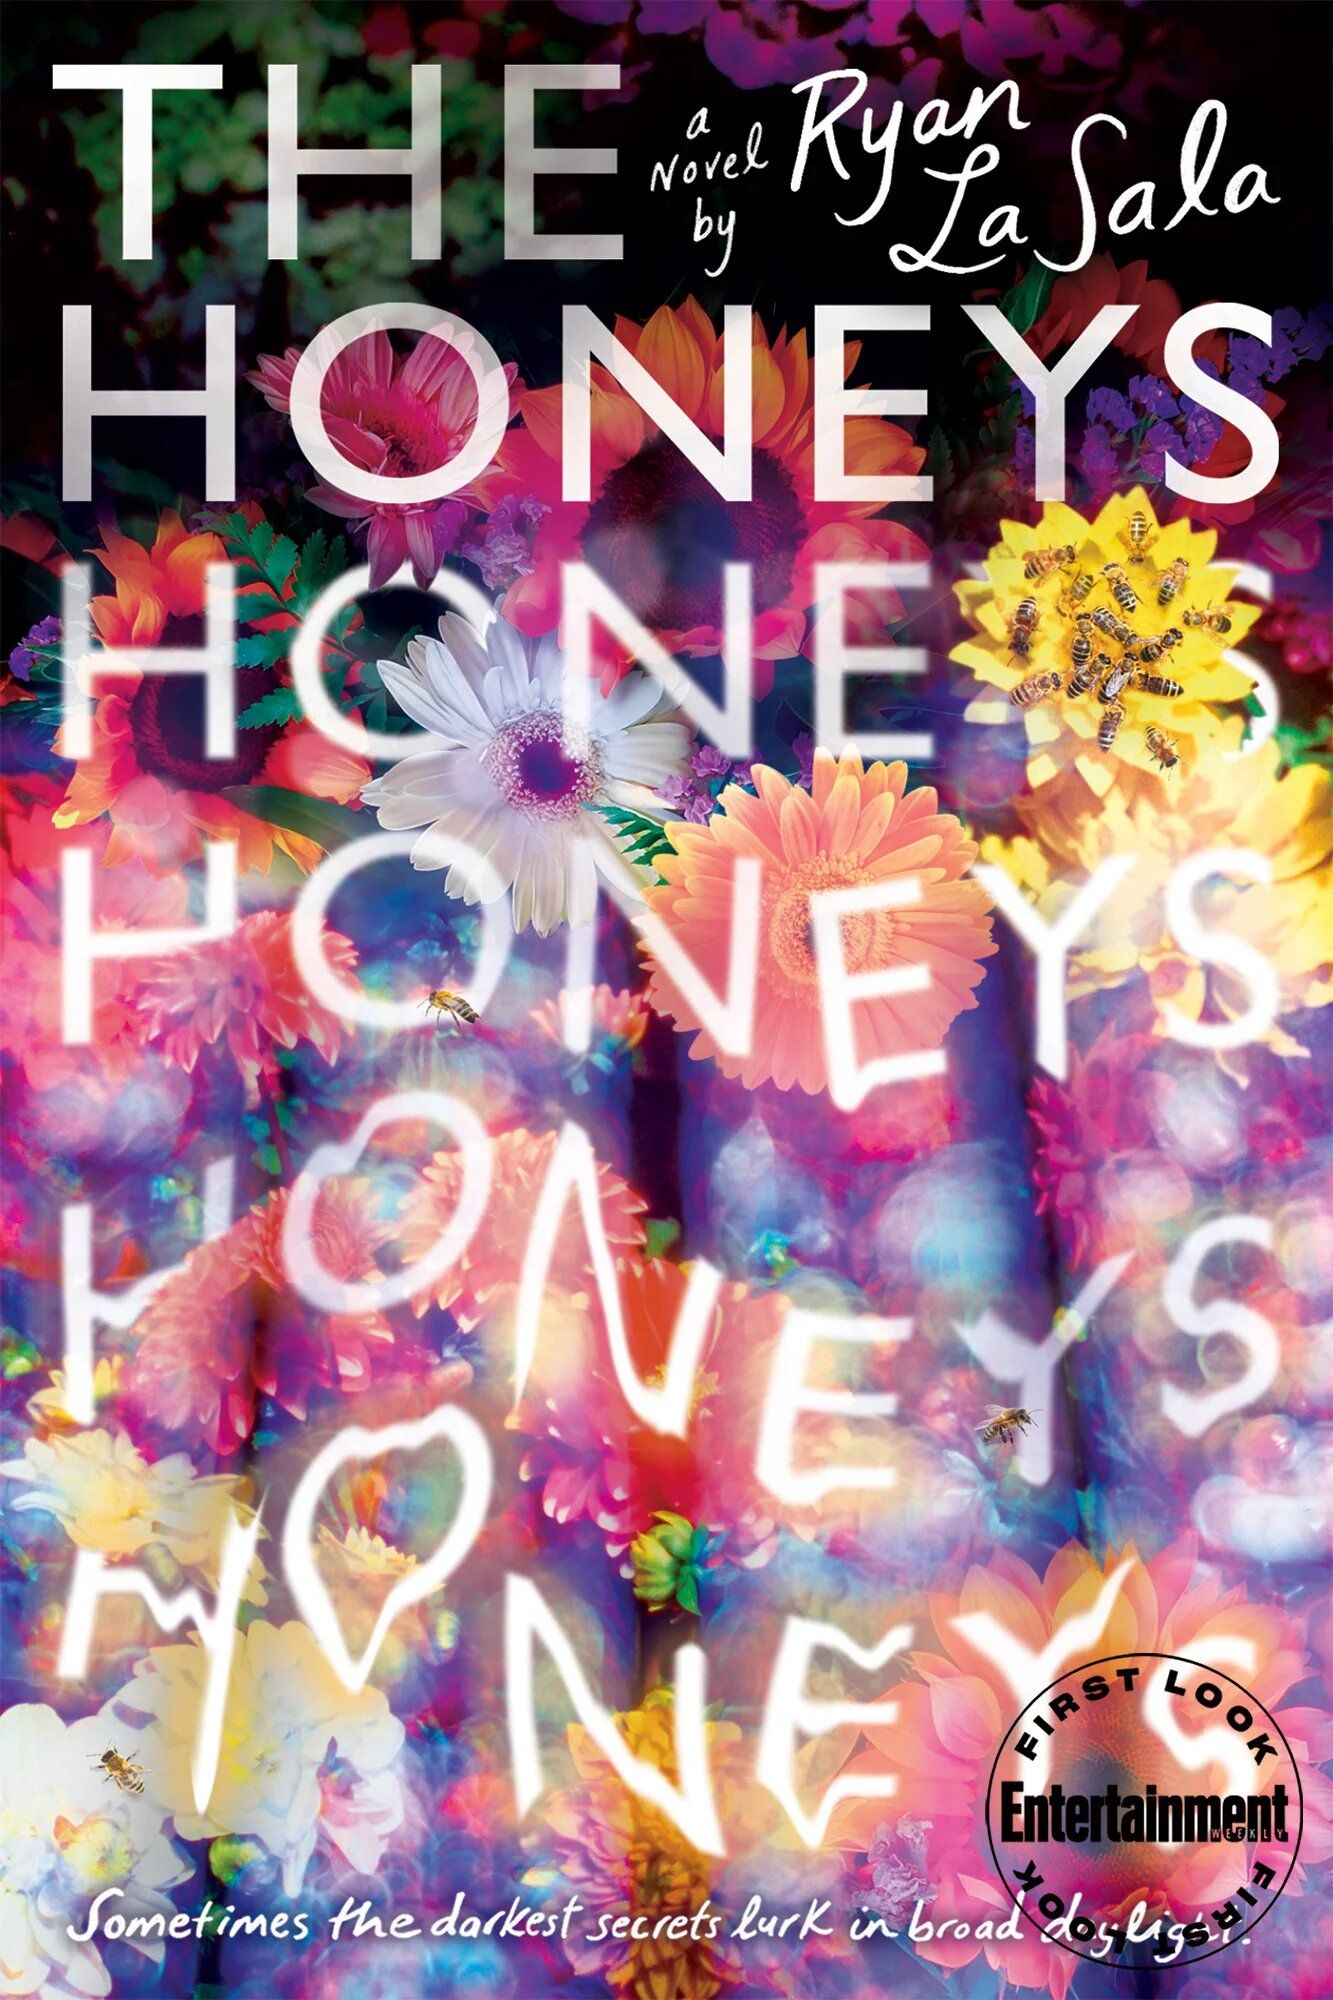 The Honeys cover